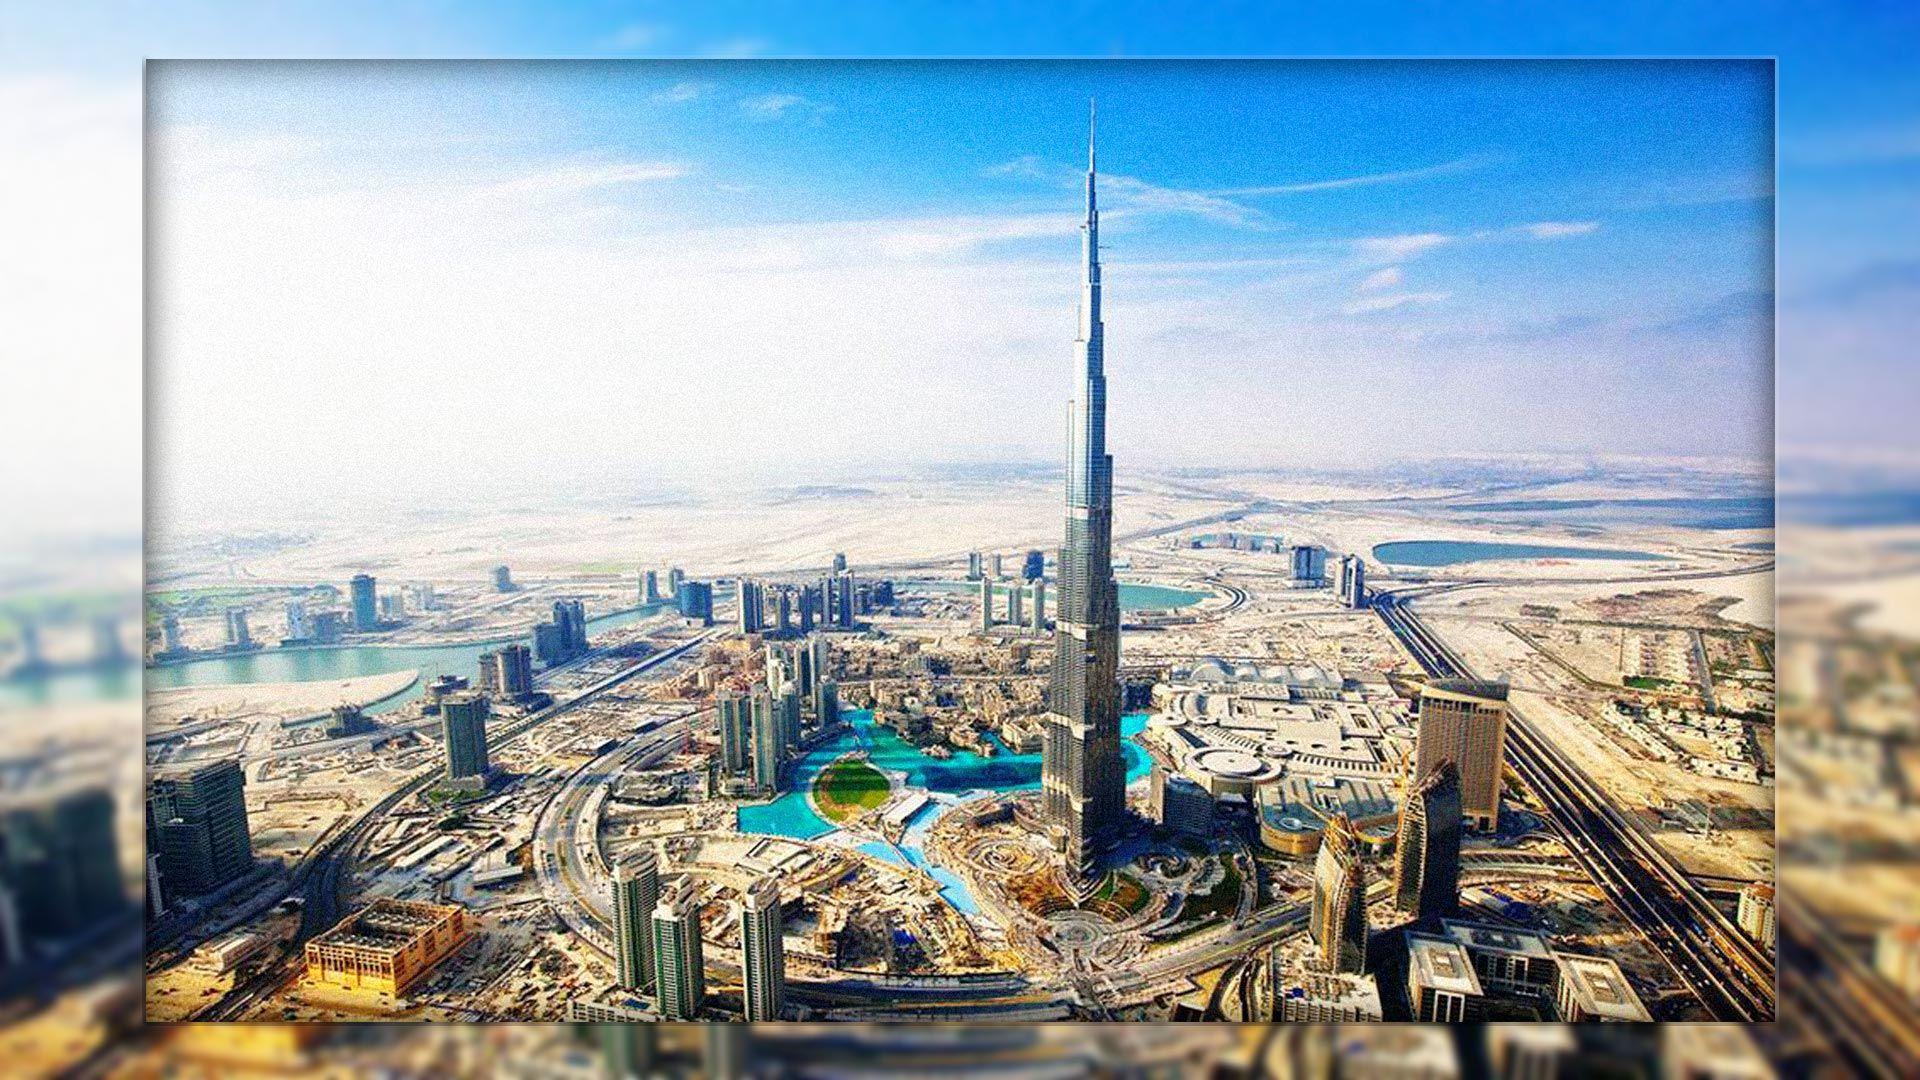 Futuristic image of the Burj Khalifa tower, the tallest building in the  world, at Dubai United Arab Emirates. - SuperStock